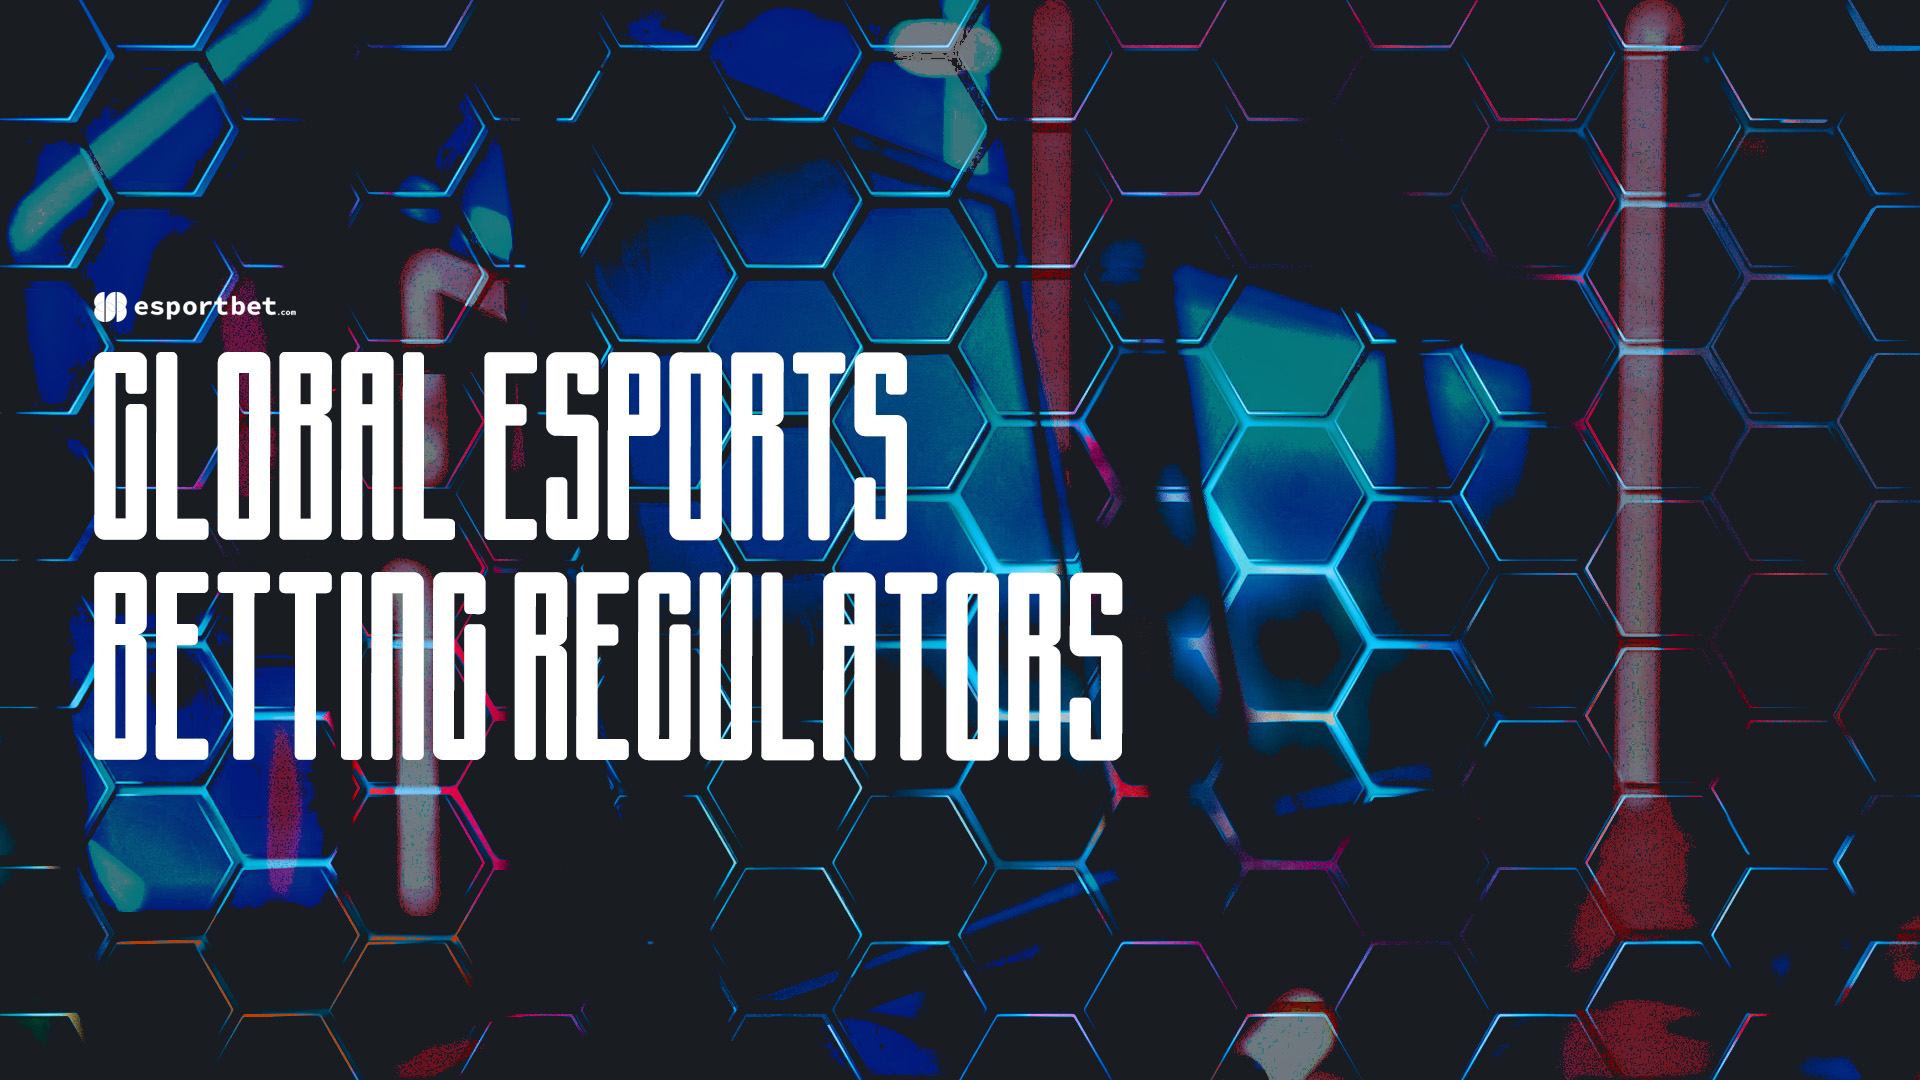 Global esports betting regulators